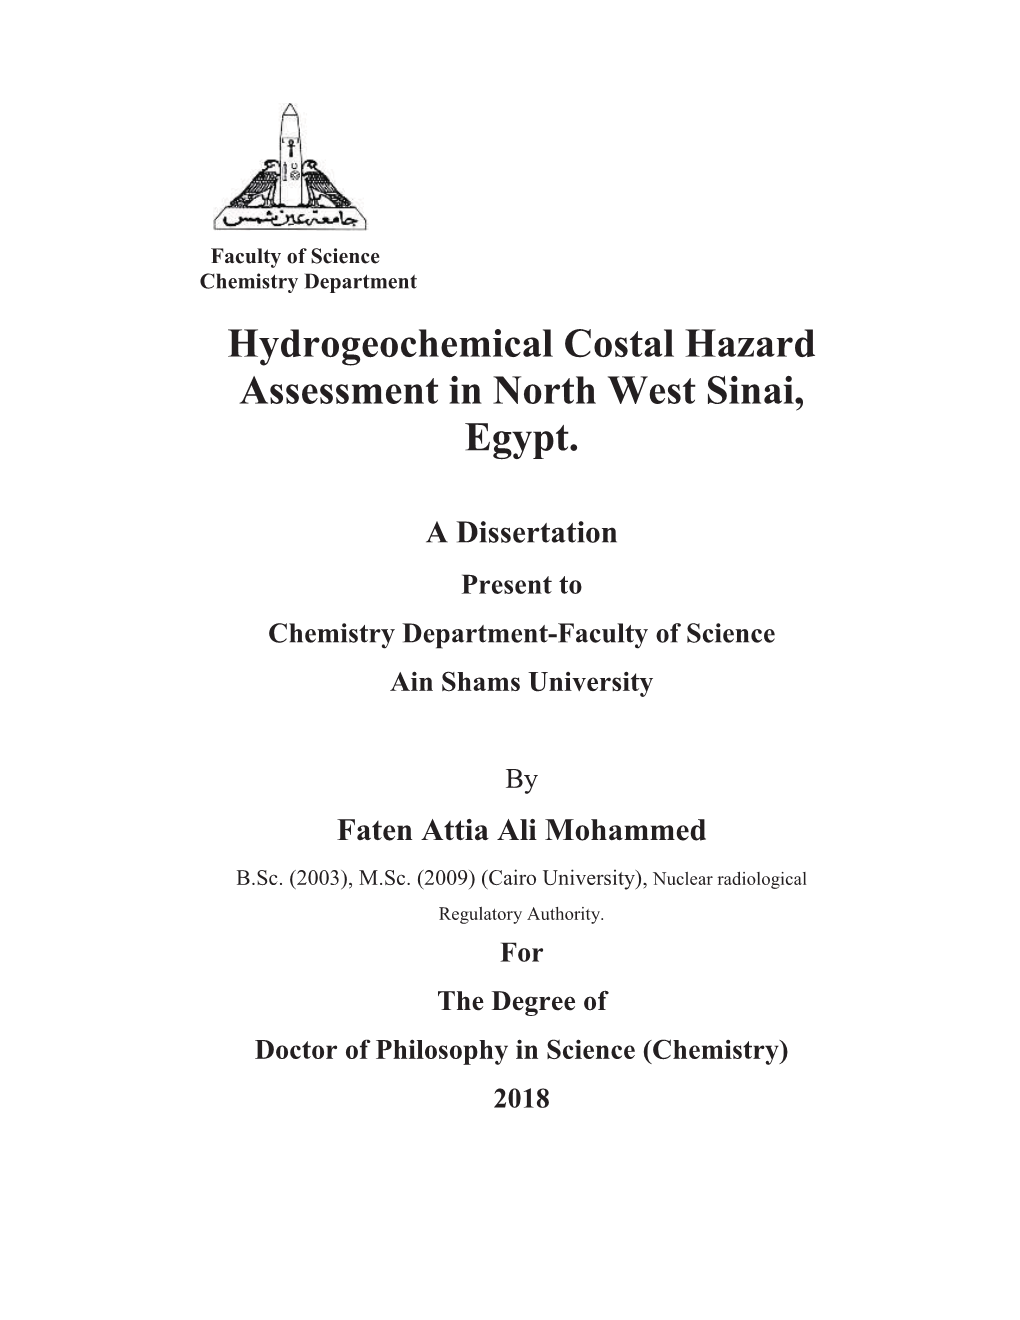 Hydrogeochemical Costal Hazard Assessment in North West Sinai, Egypt